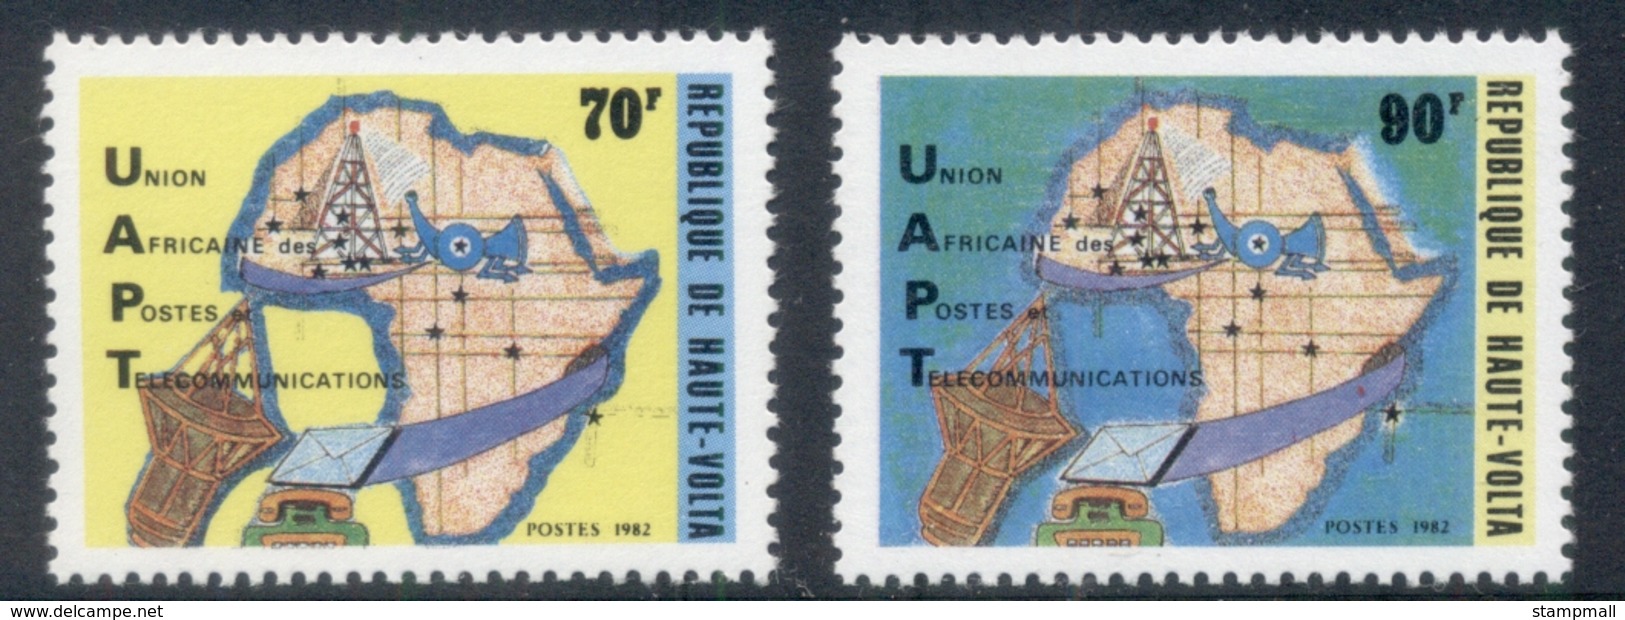 Upper Volta 1982 African Postal Union MUH - Upper Volta (1958-1984)